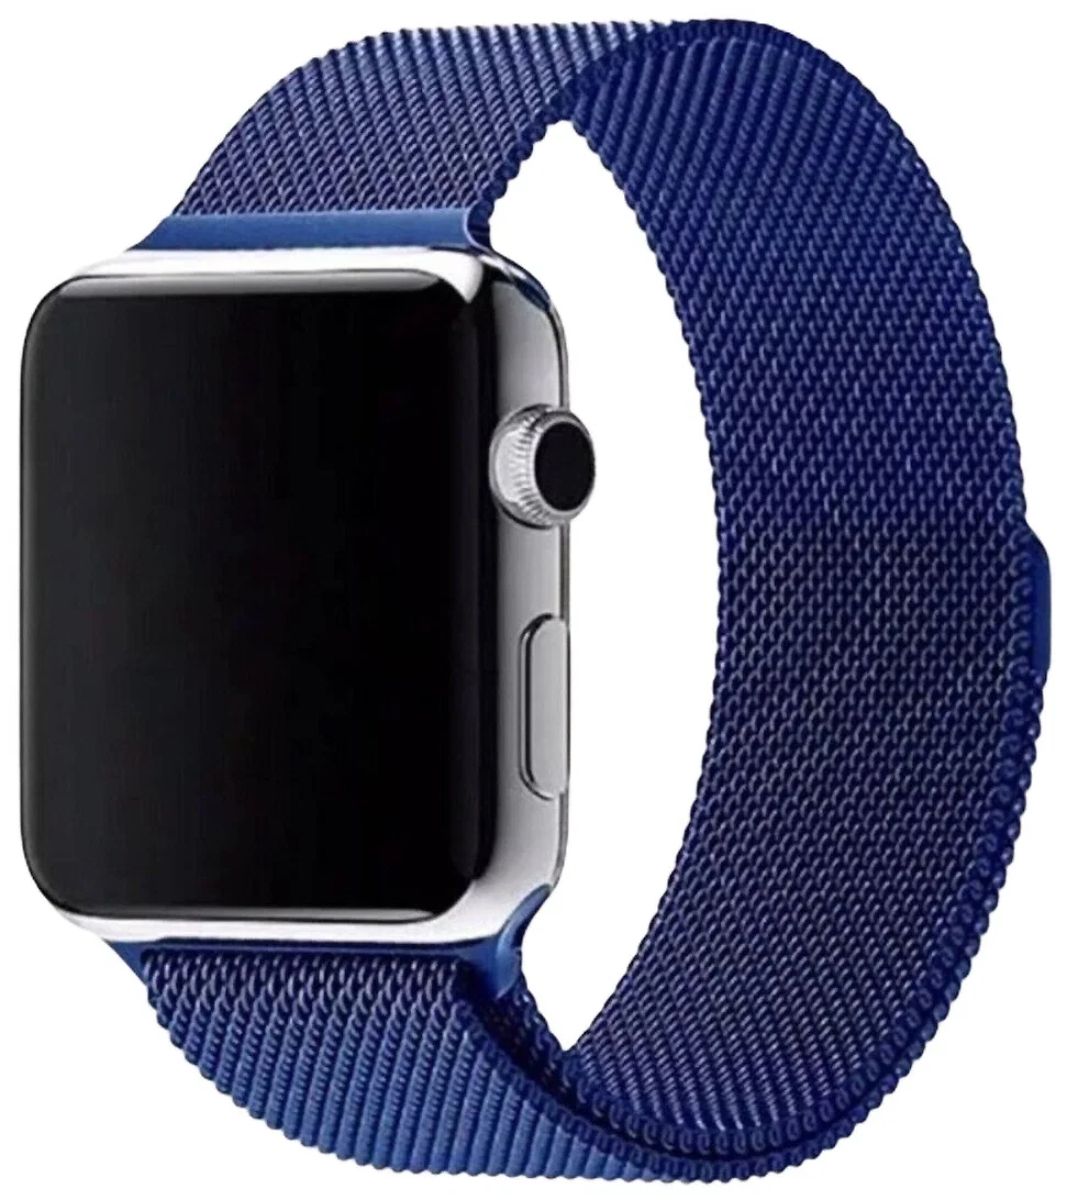 Apple watch milanese loop. Ремешок Apple 40mm Milanese loop. Ремешок Эппл вотч Миланская петля. Ремешок для Apple watch 44mm. Ремешок Миланская петля для Apple watch.